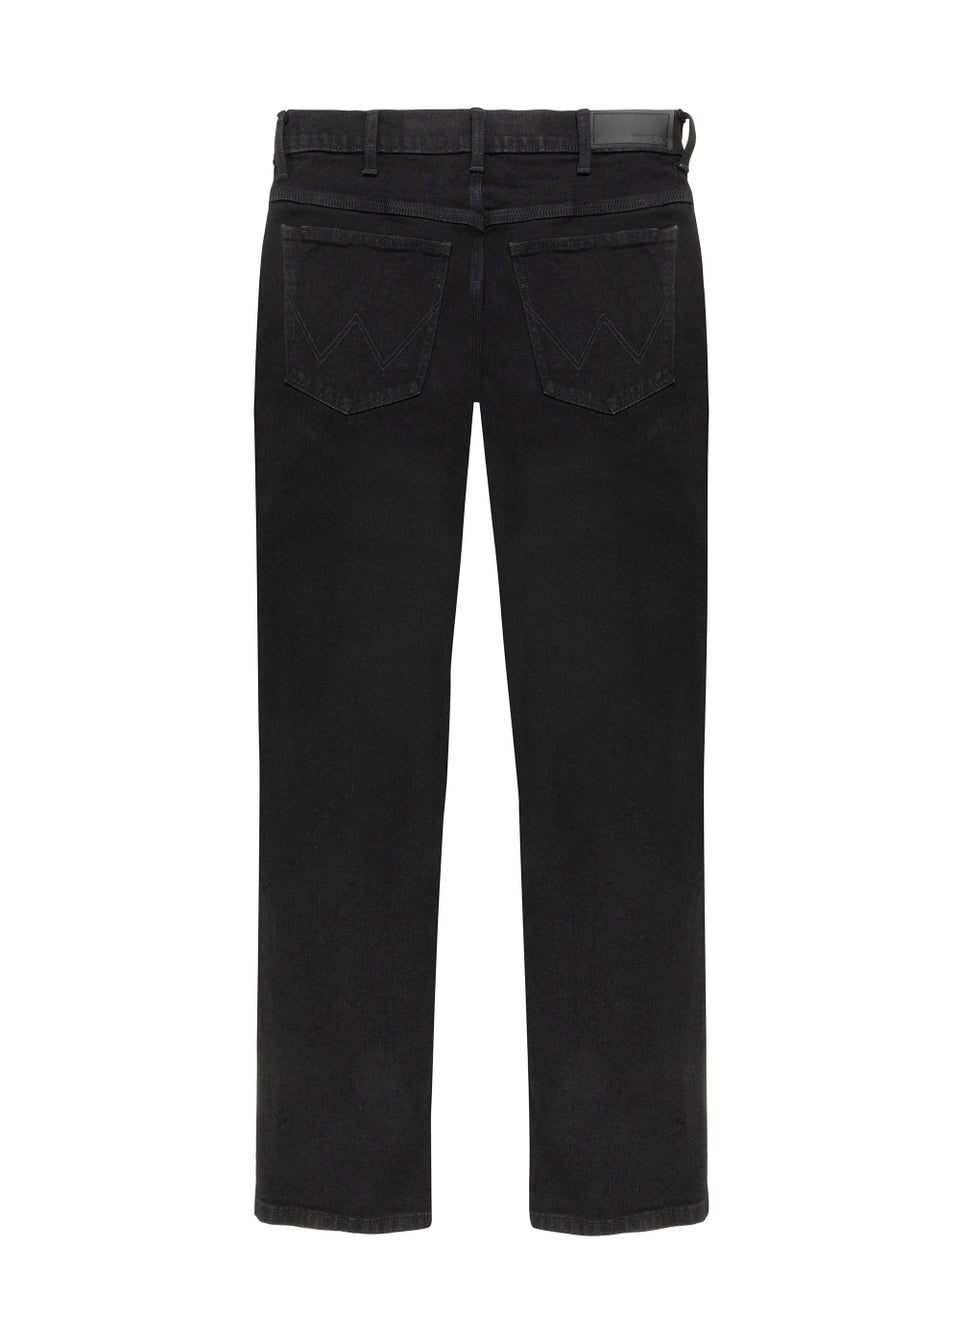 Wrangler Black Slim Fit Jeans - Matalan